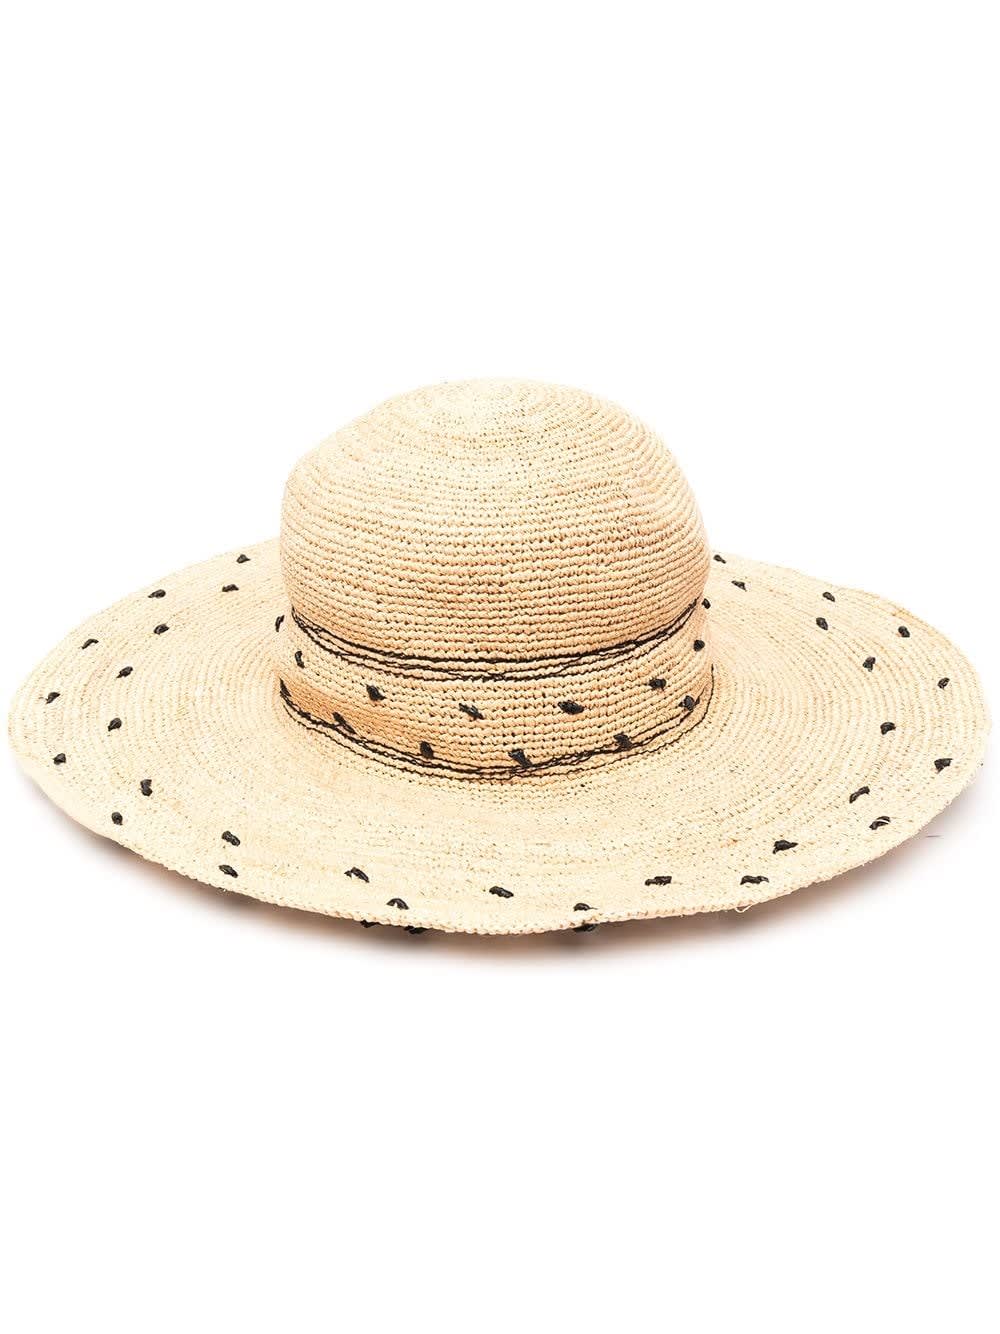 Parosh Straw Hat With Polka Dot Embroidery